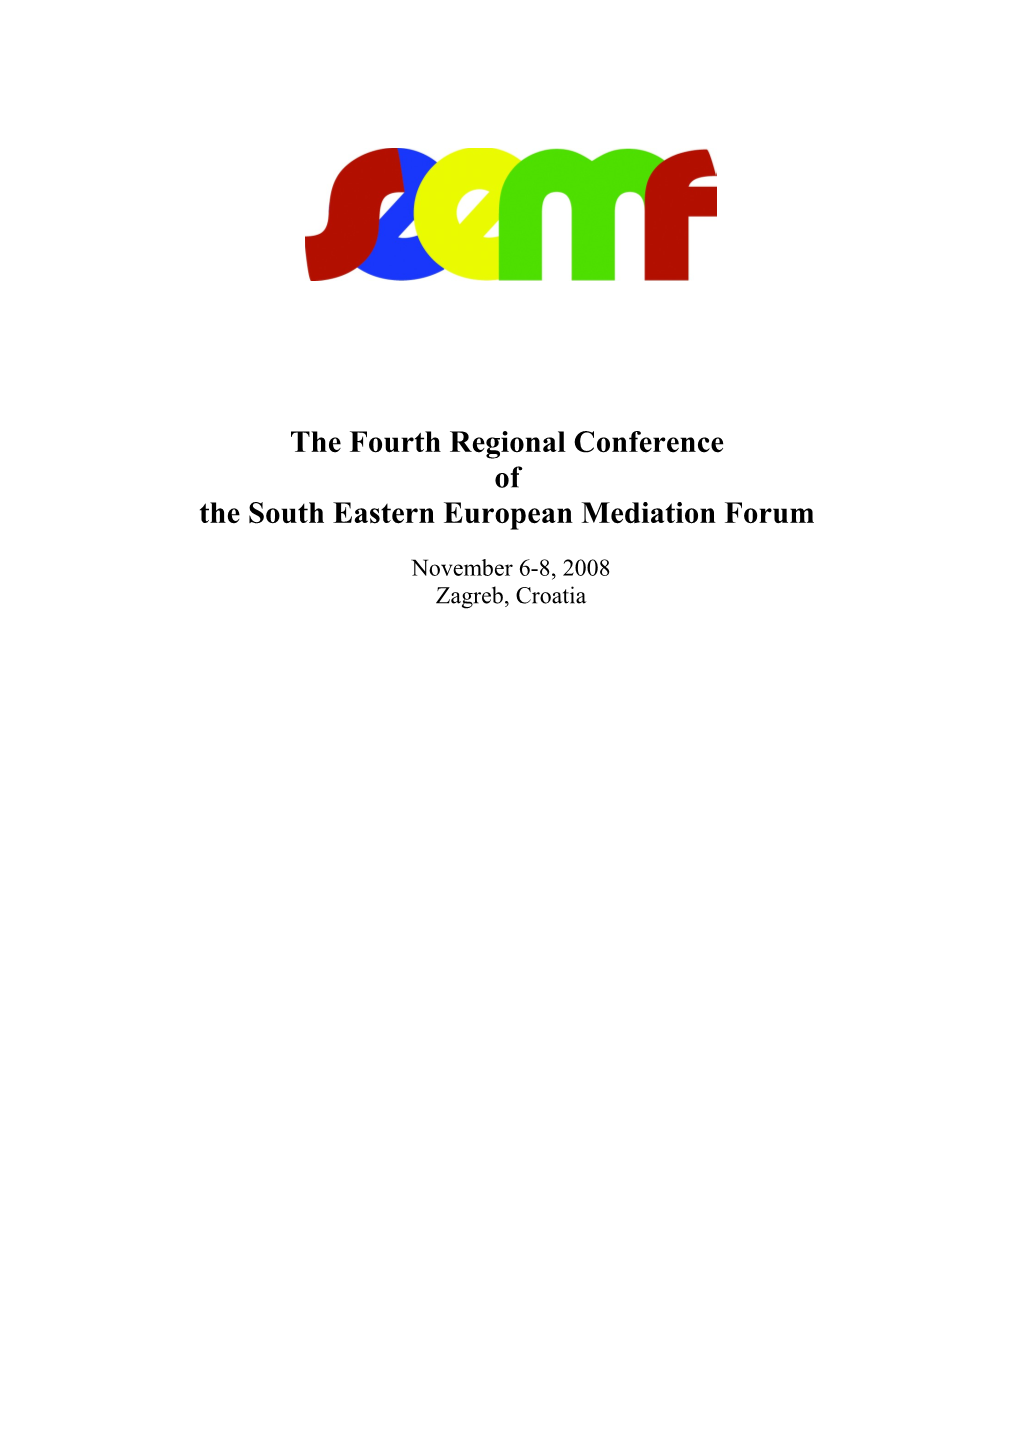 The South Eastern European Mediation Forum (SEEMF)